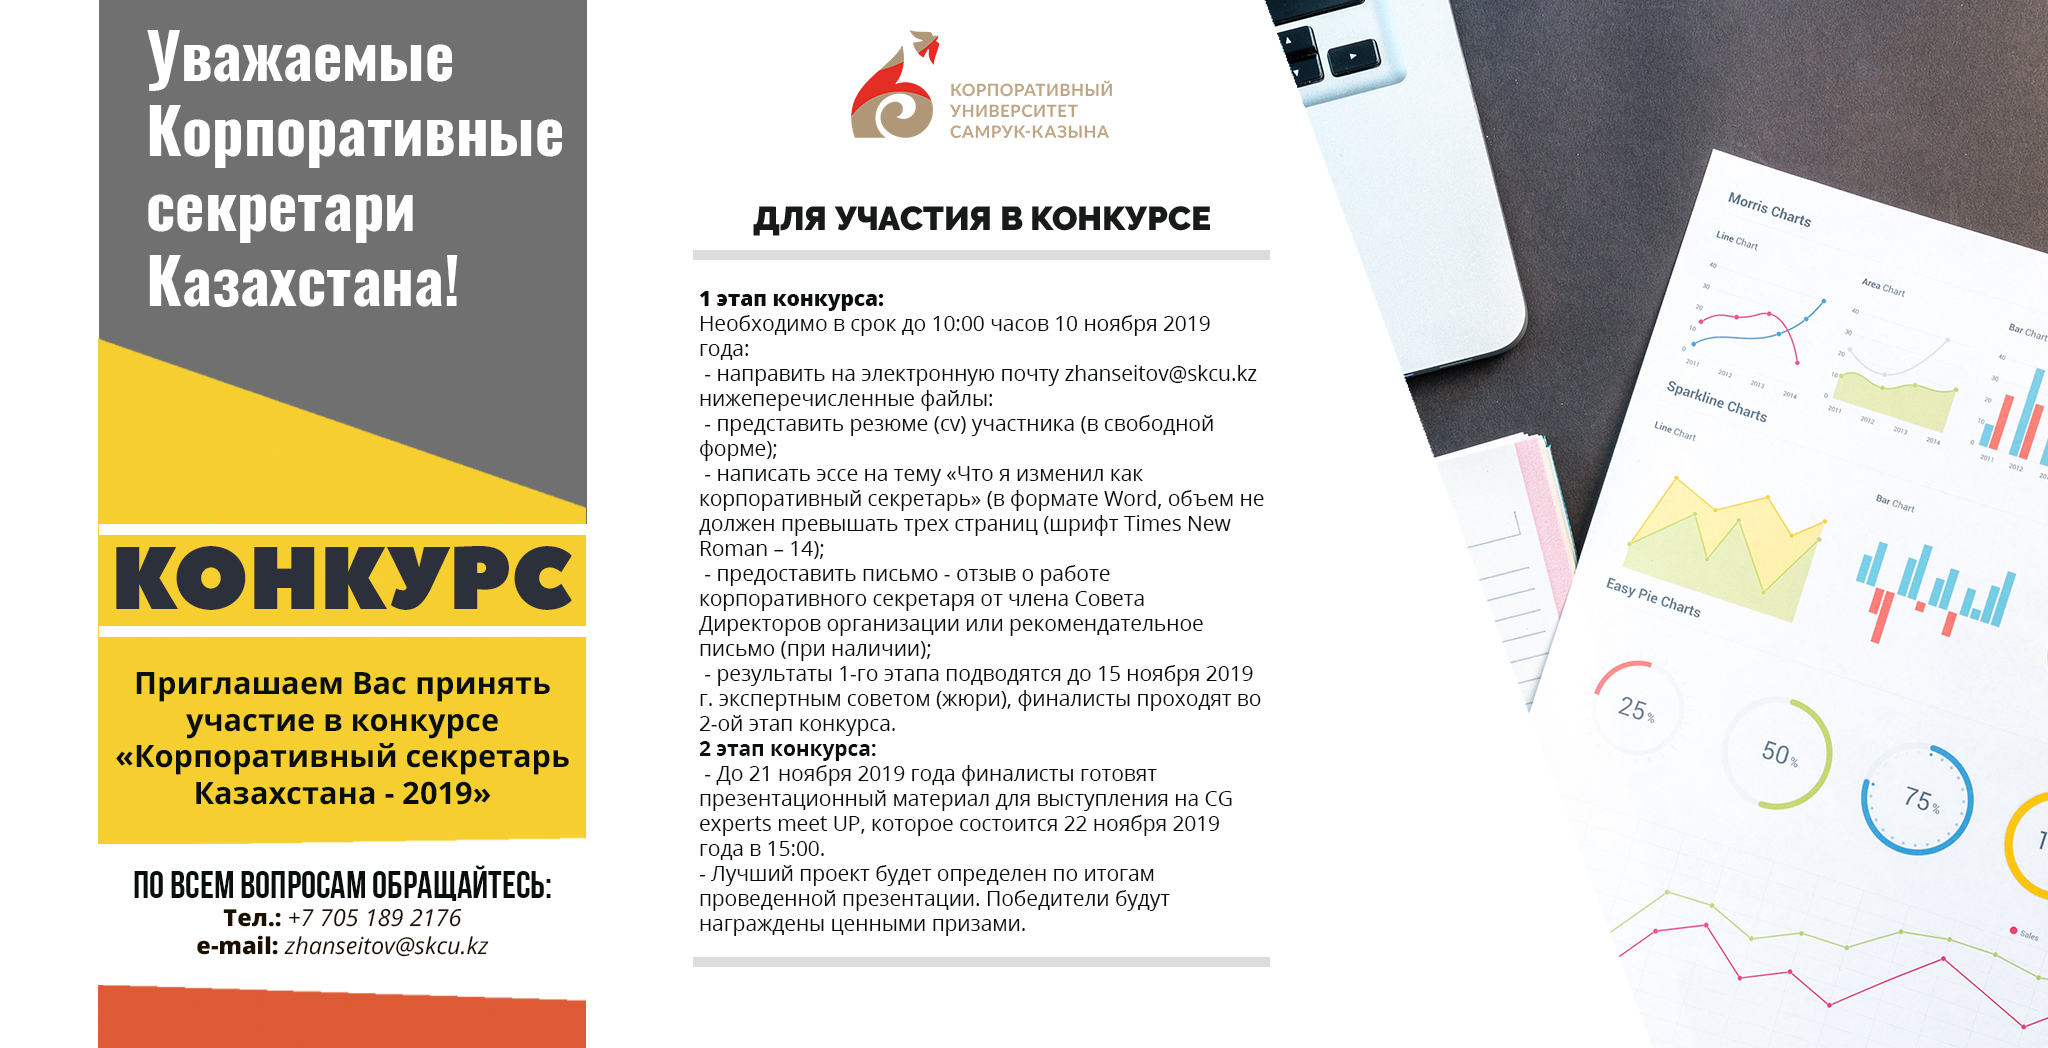 Станьте «Корпоративным секретарем Казахстана - 2019»: конкурс